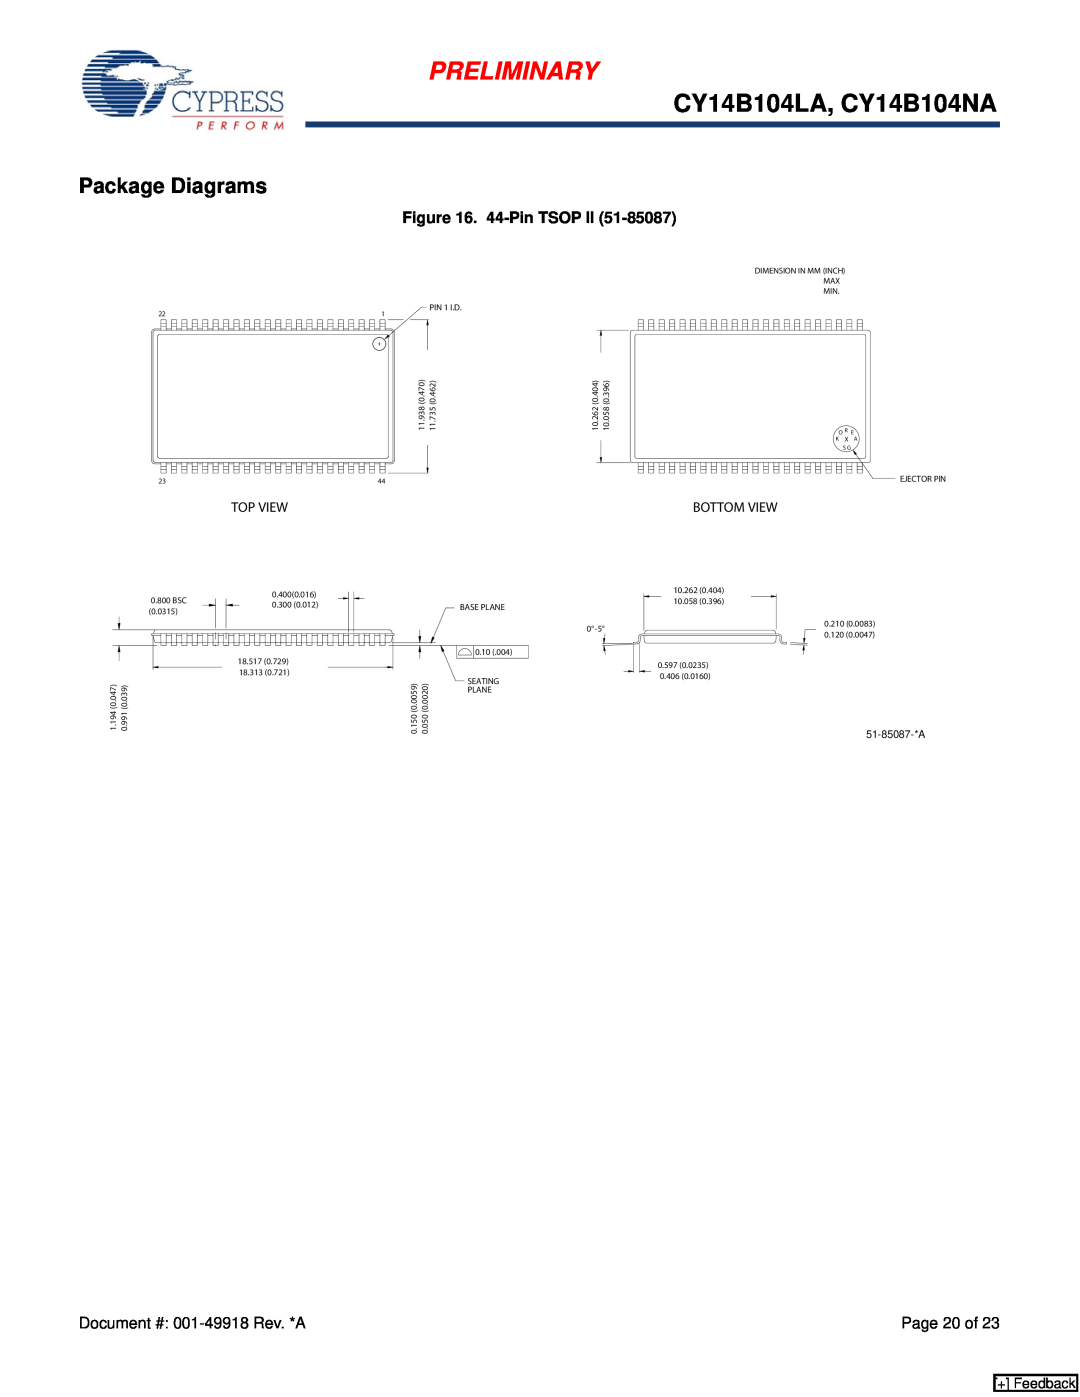 Cypress manual Package Diagrams, Preliminary, CY14B104LA, CY14B104NA, 44-Pin TSOP II, + Feedback 